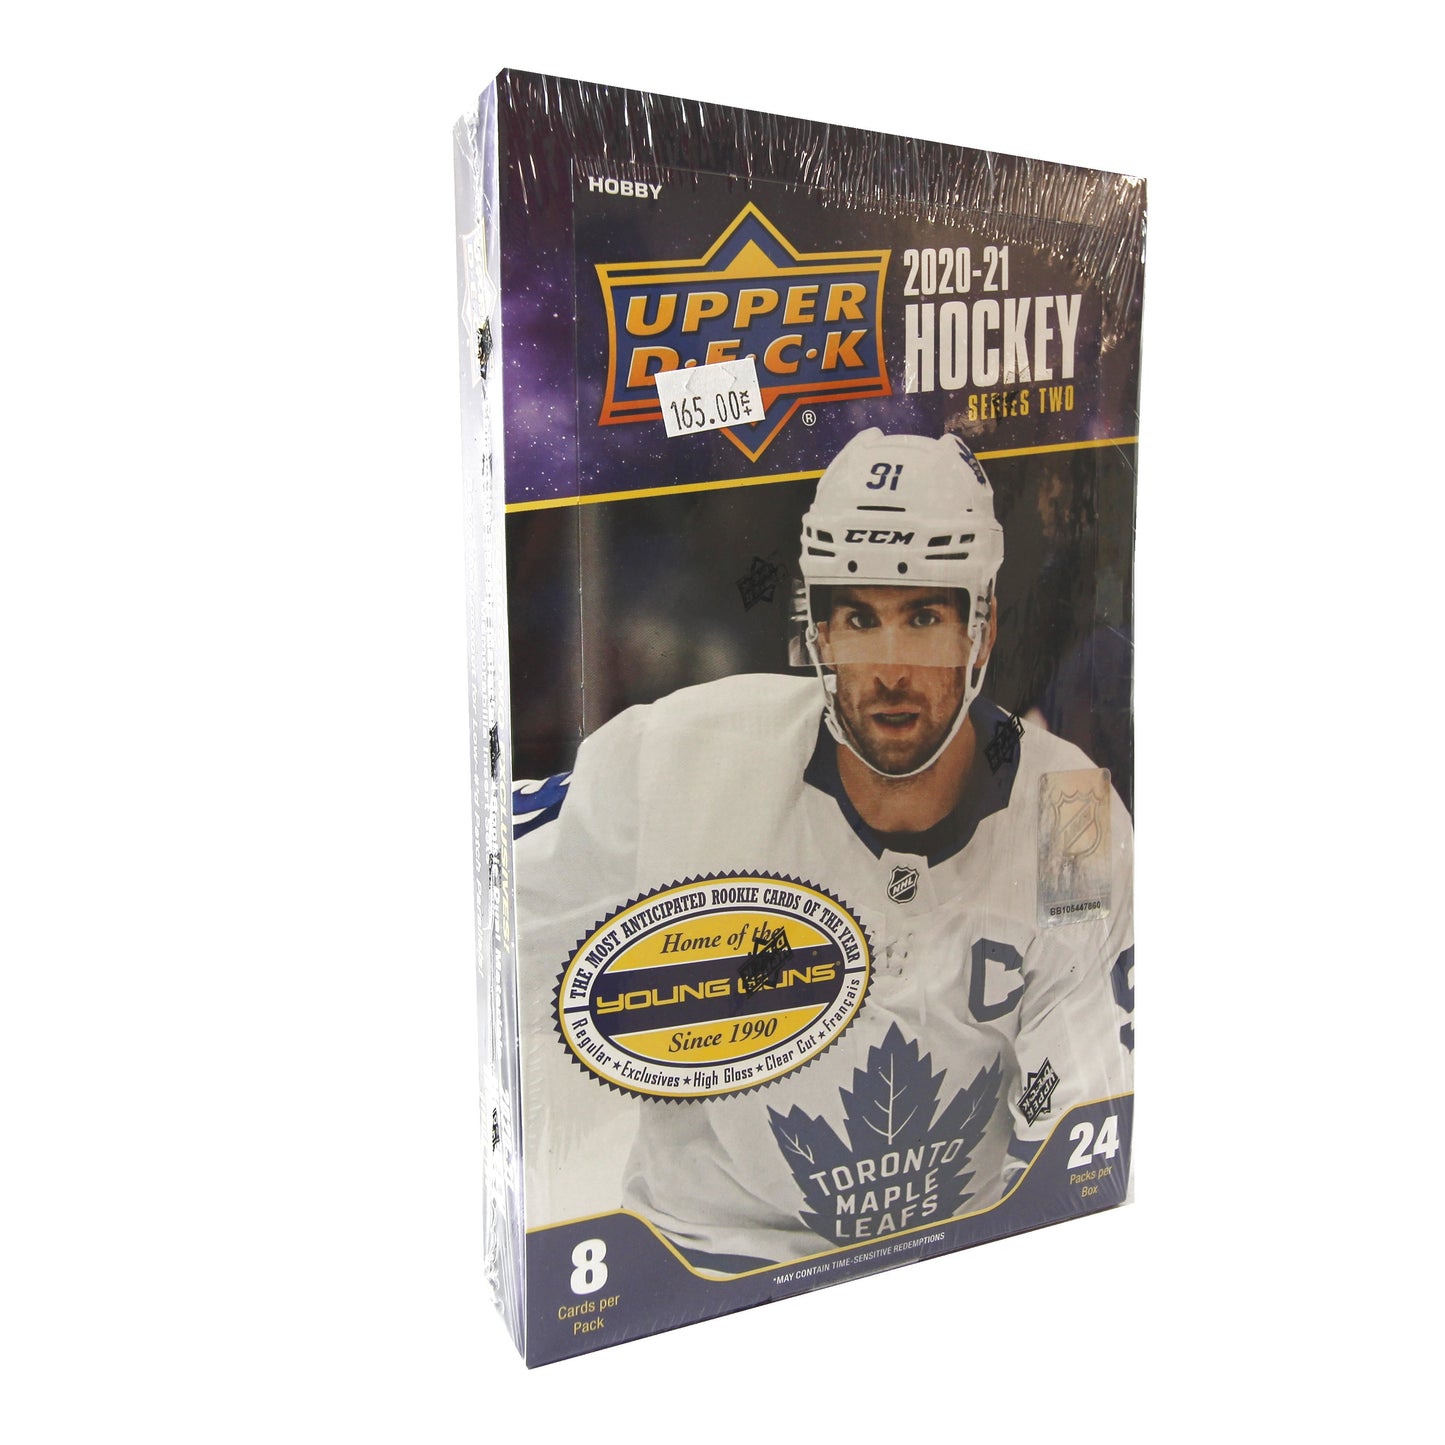 2020-21 Upper Deck NHL Series 2 Hobby Box